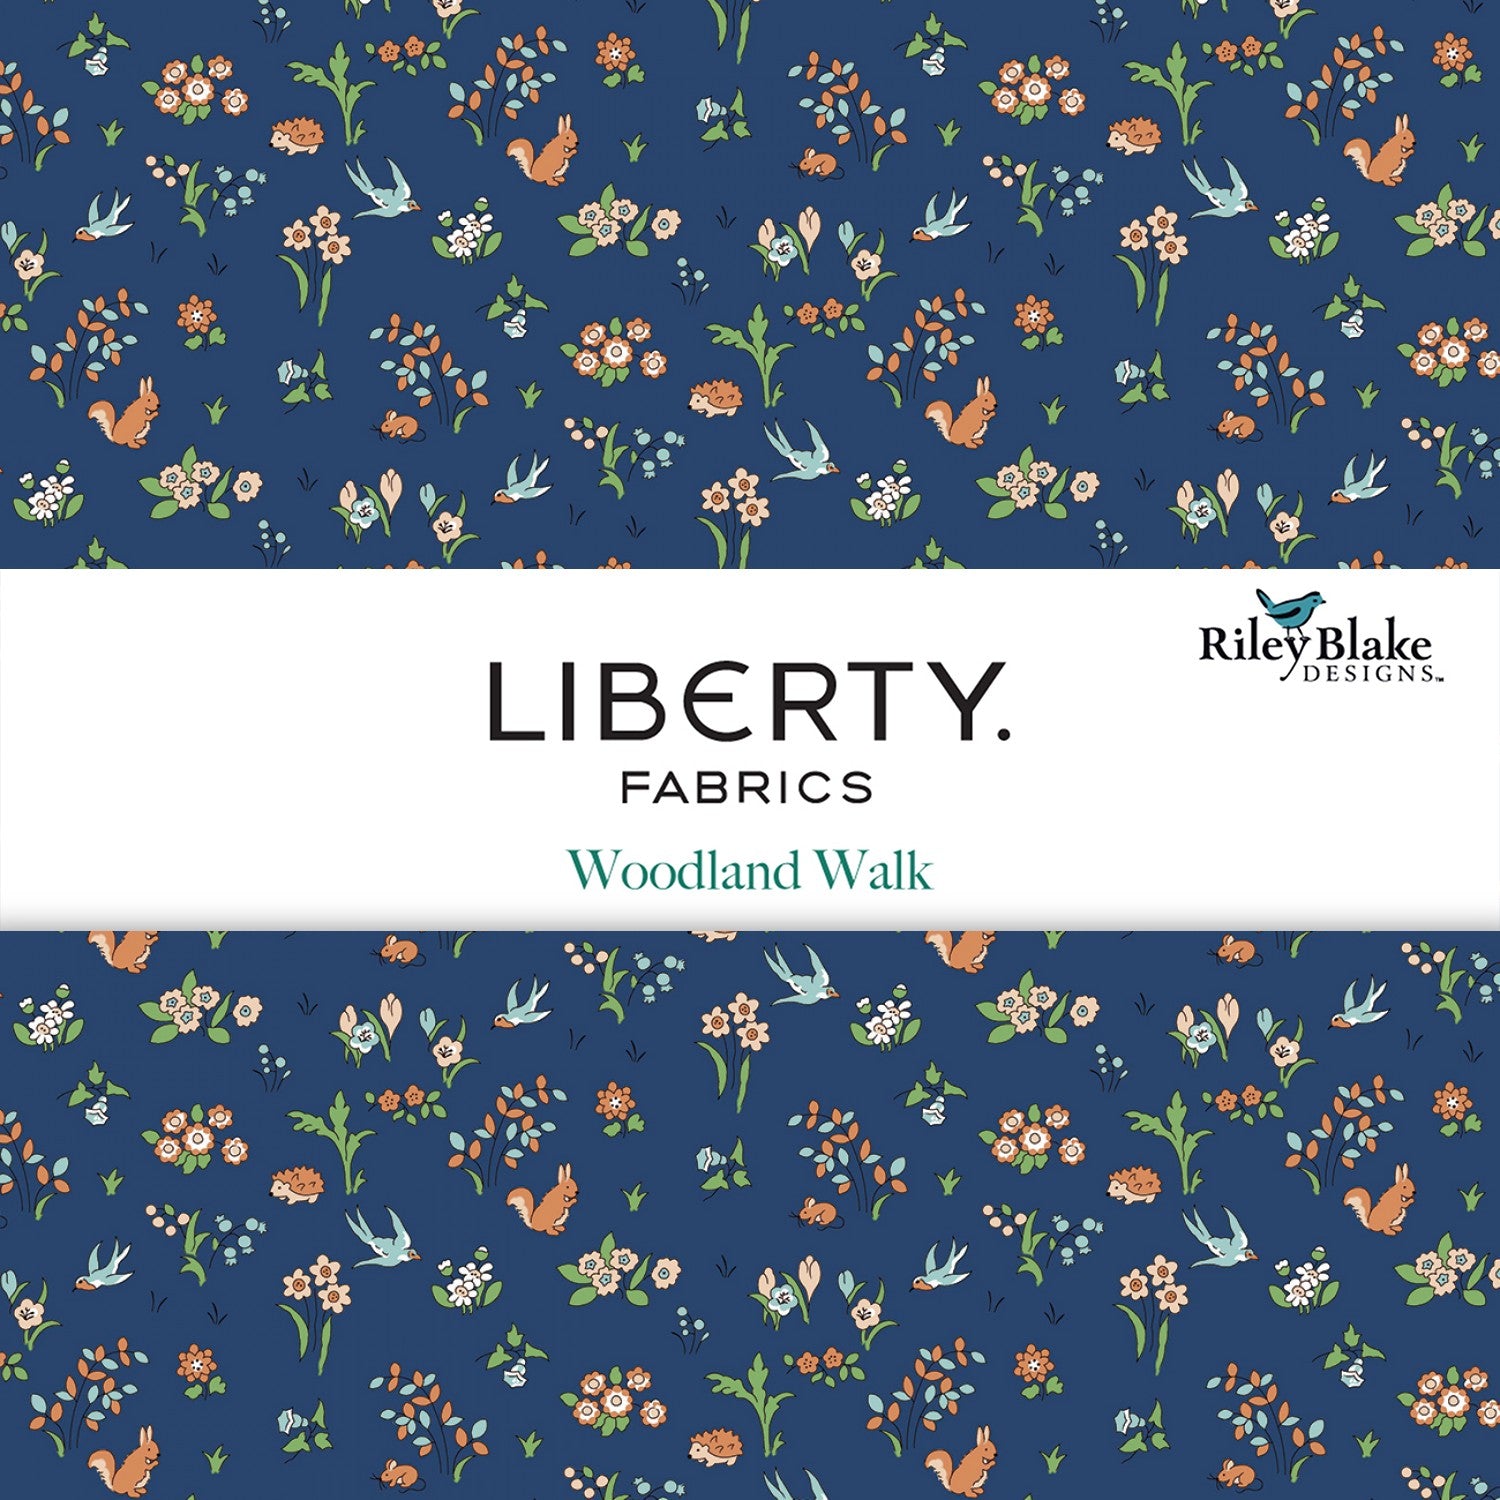 Woodland Walk - Autumn Berries 5" Charm Pack by Liberty Fabrics (42pcs)